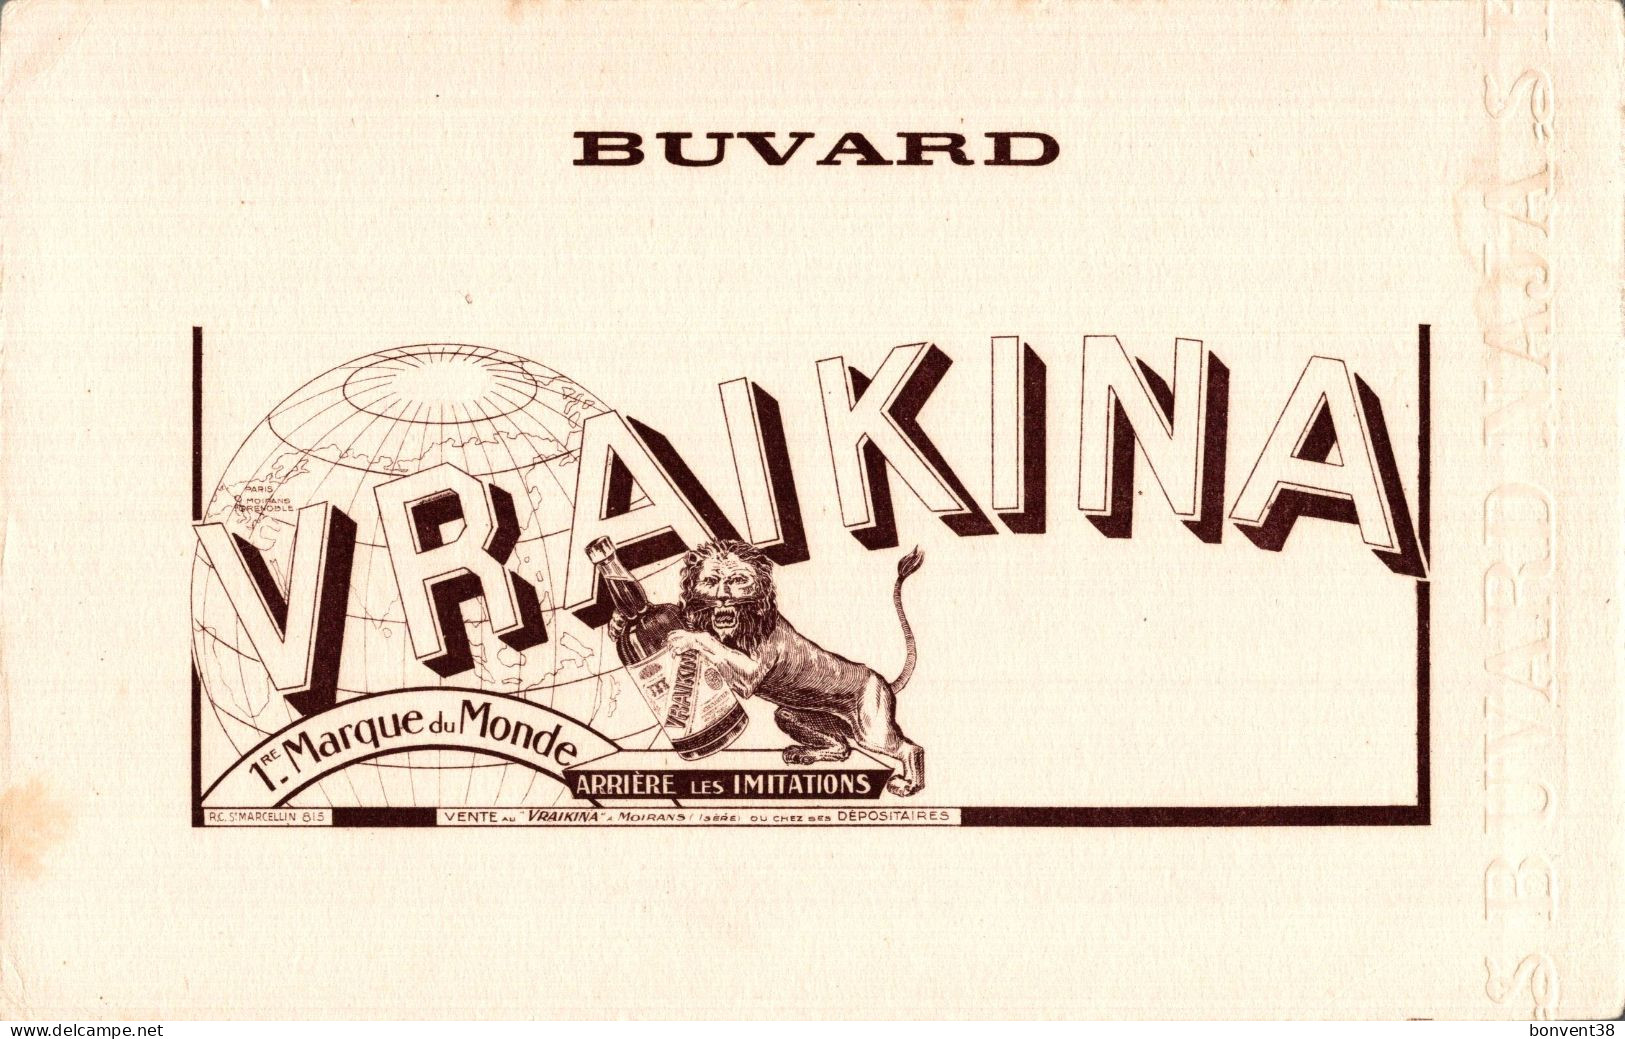 J2707 - BUVARD - VRAIKINA - LION - MOIRANS - Liquore & Birra